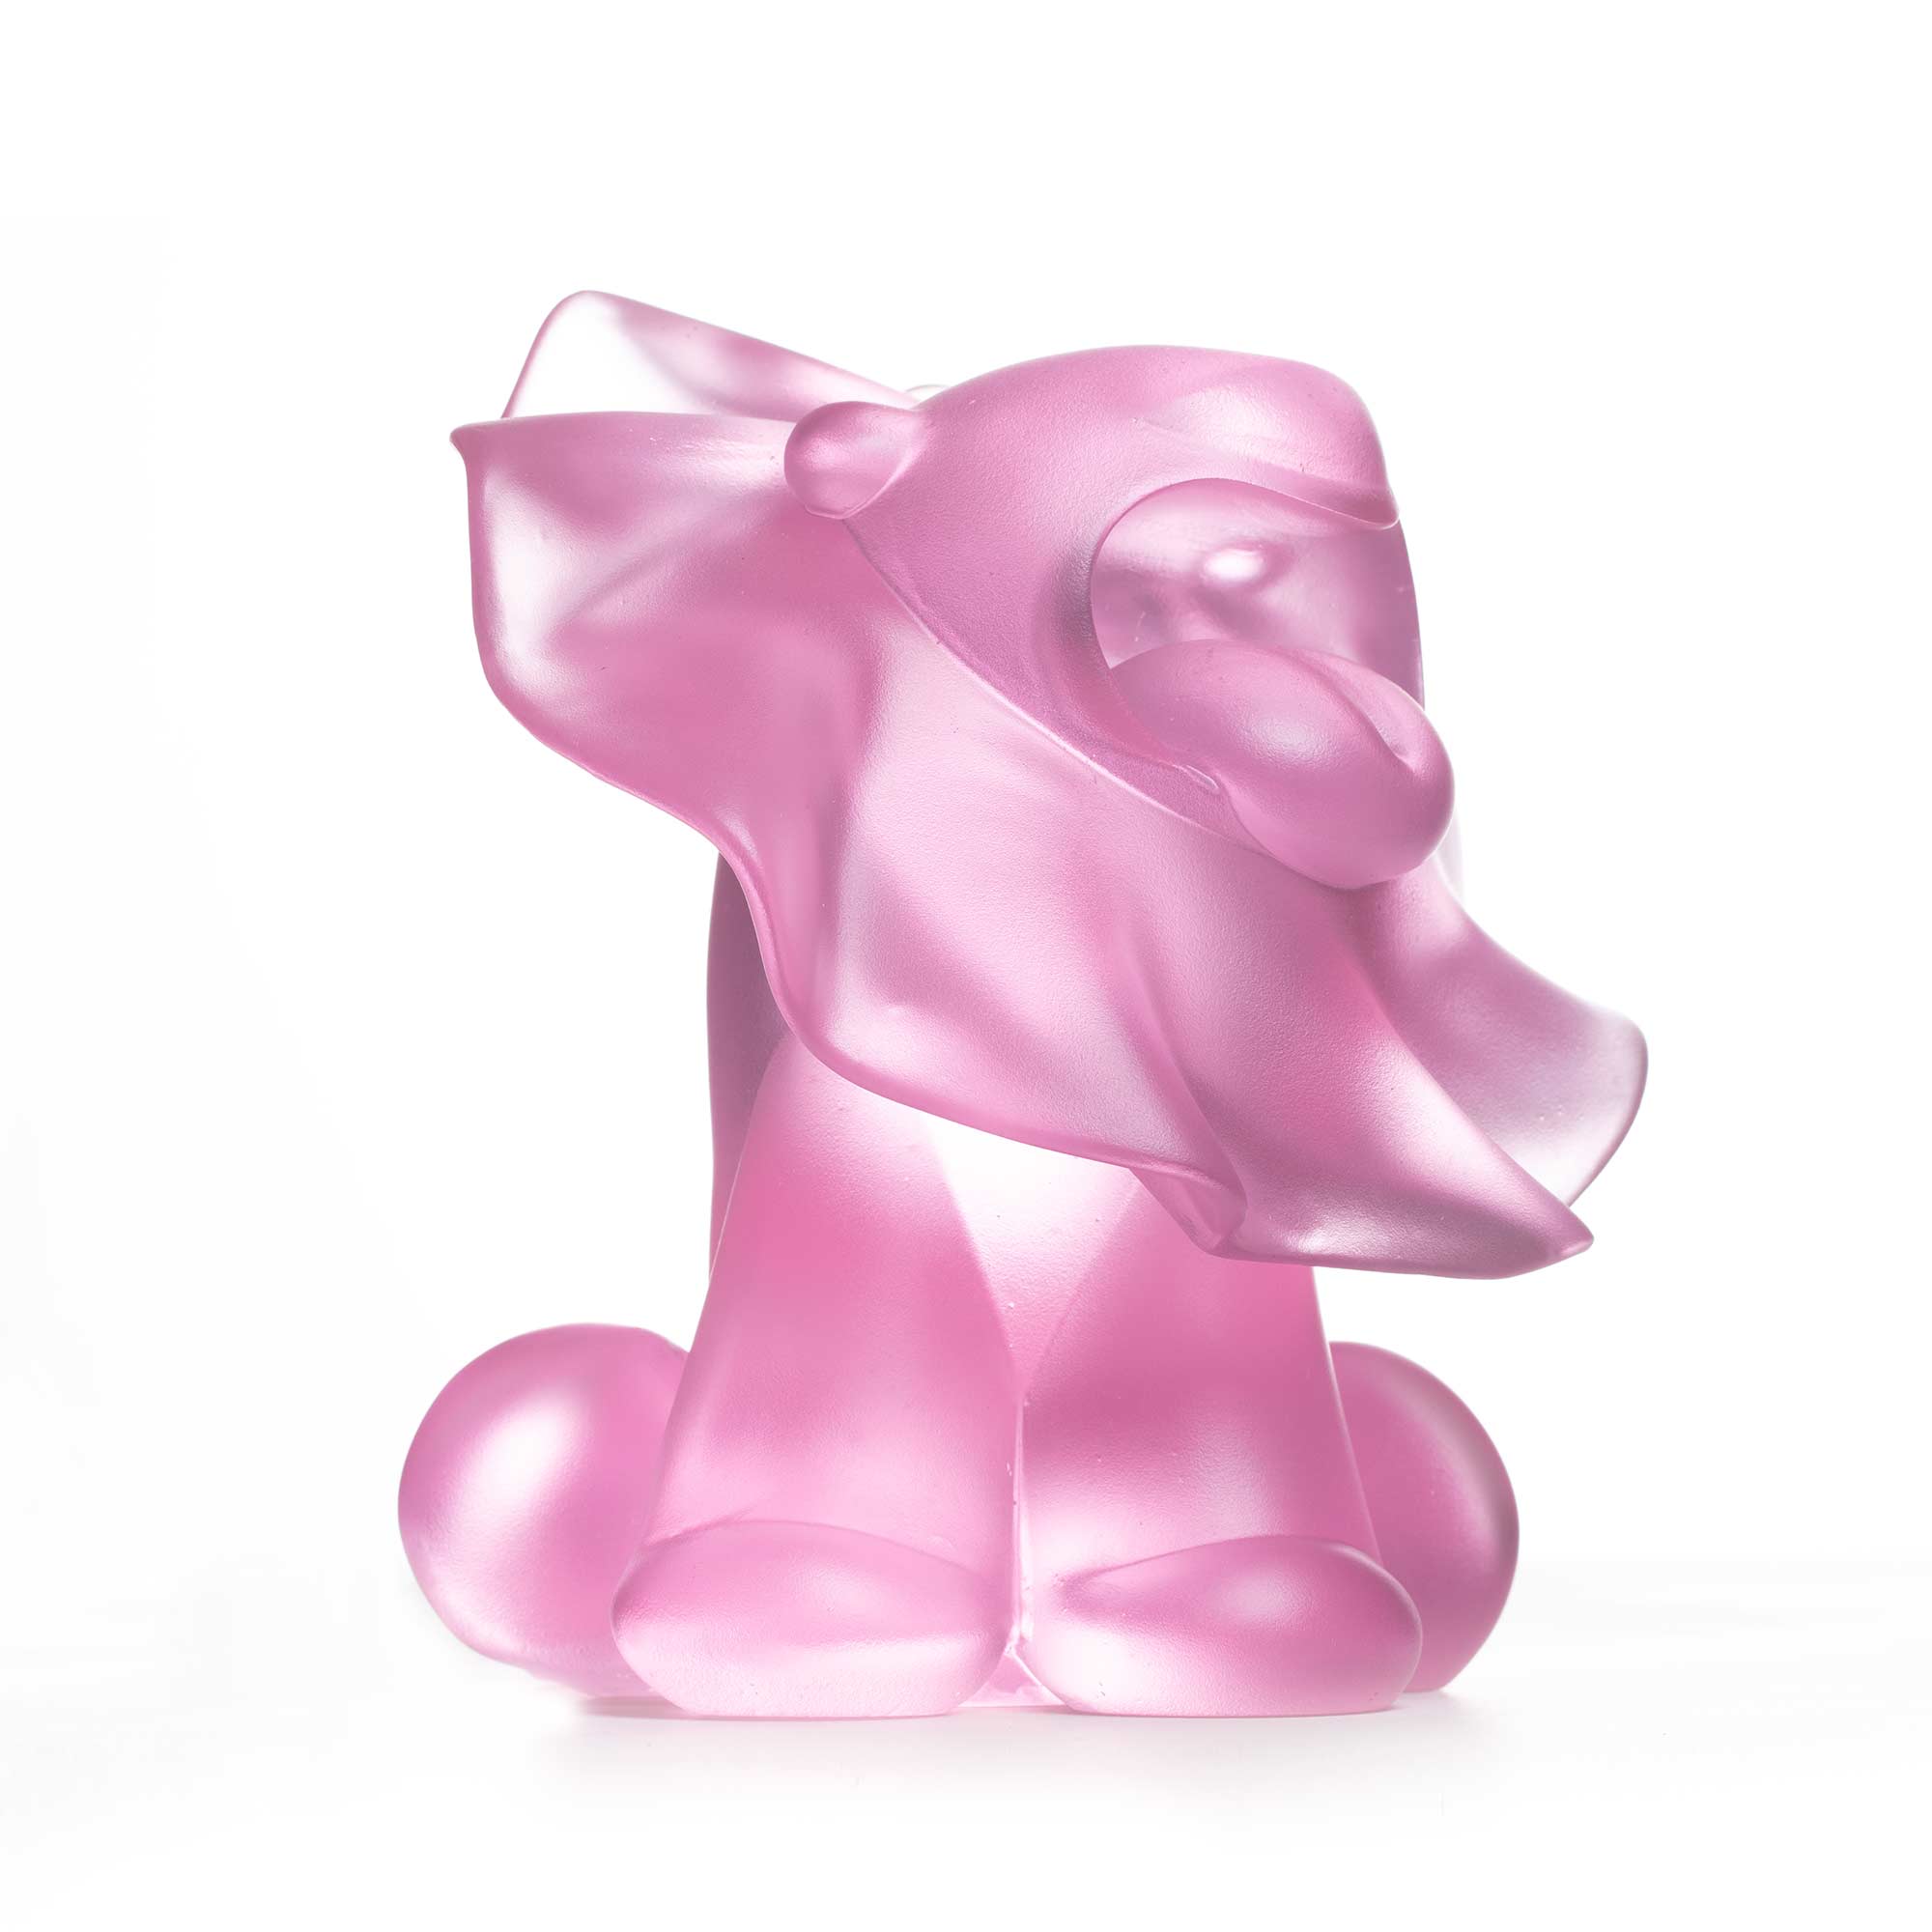 Lion roar, pink crystal sculpture,  15 cm height, by artist Ferdi B Dick, hero view